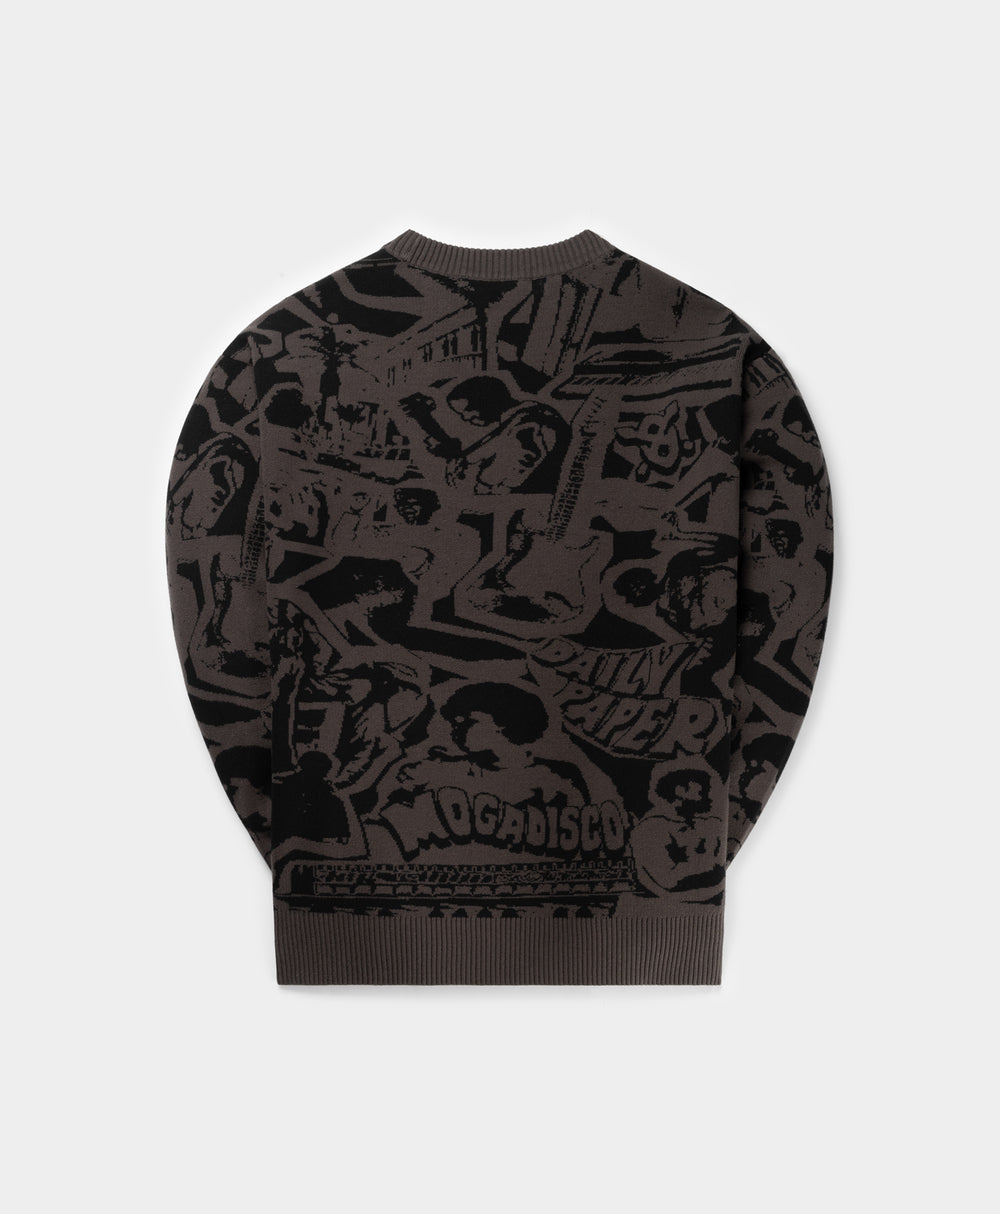 DP - Ash Grey Hogba Sweater - Packshot - Rear